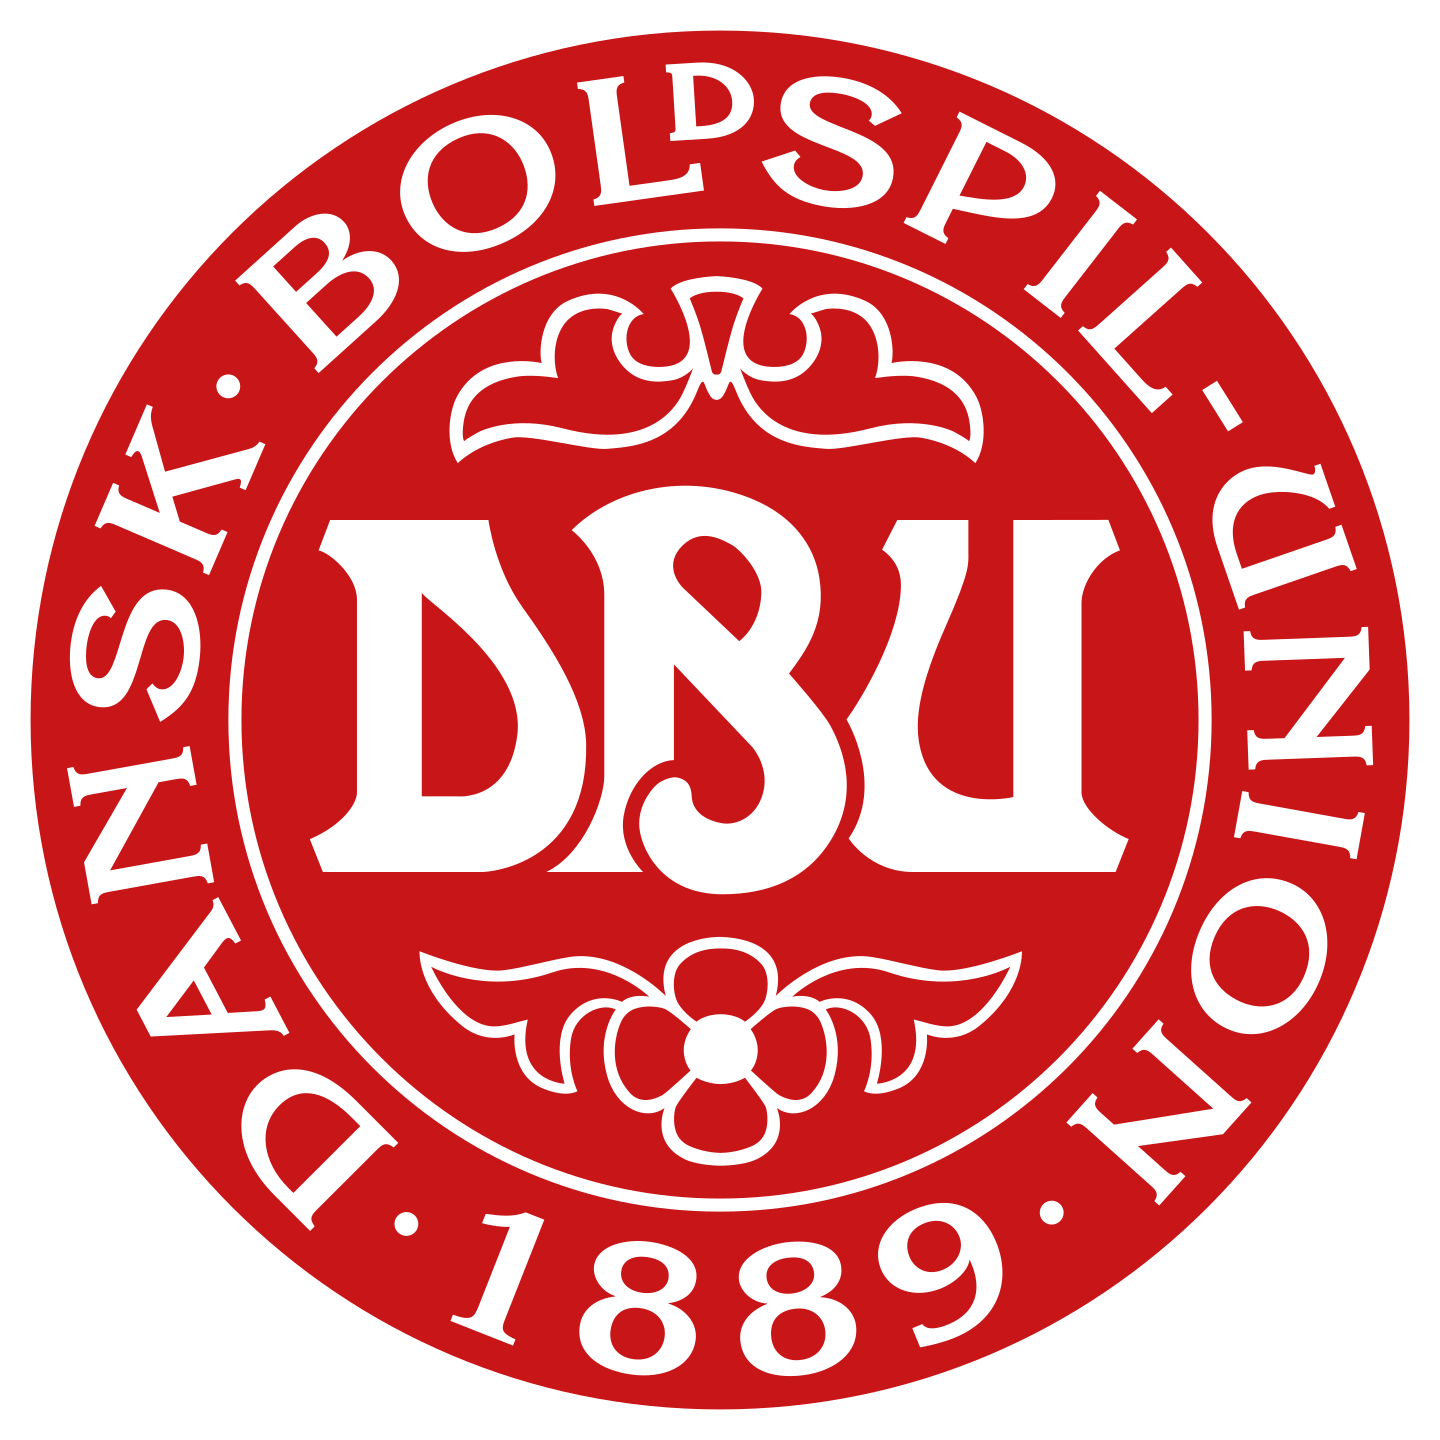 denmark national football team logo 2 - Équipe du Danemark de Football Logo